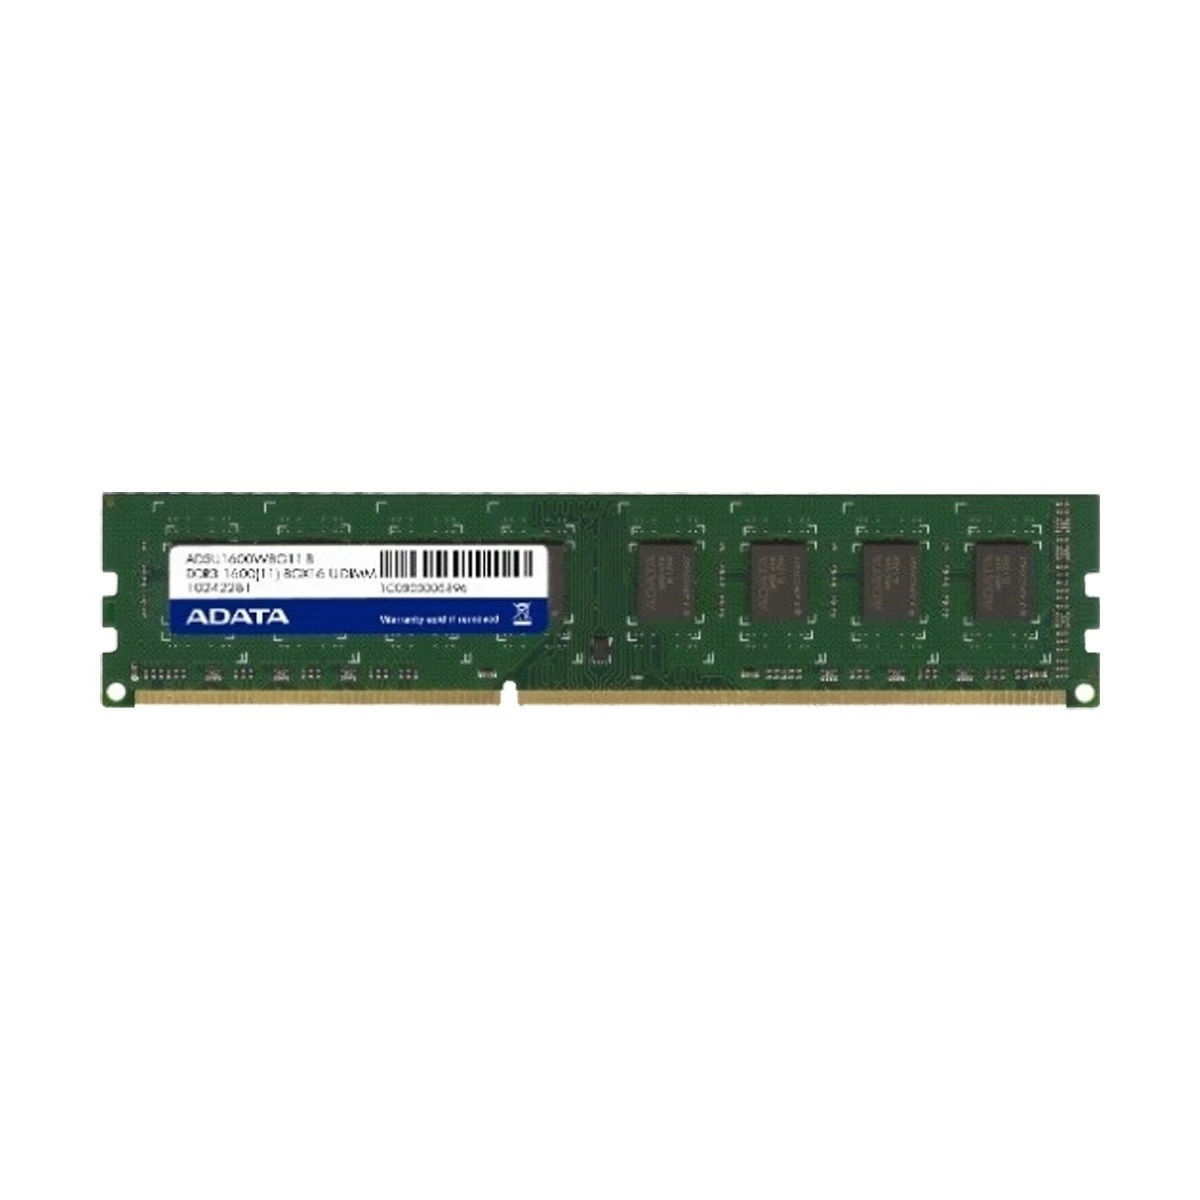 Adata 4GB DDR3 1600MHz Desktop RAM #ADDX1600W4G11-SPU